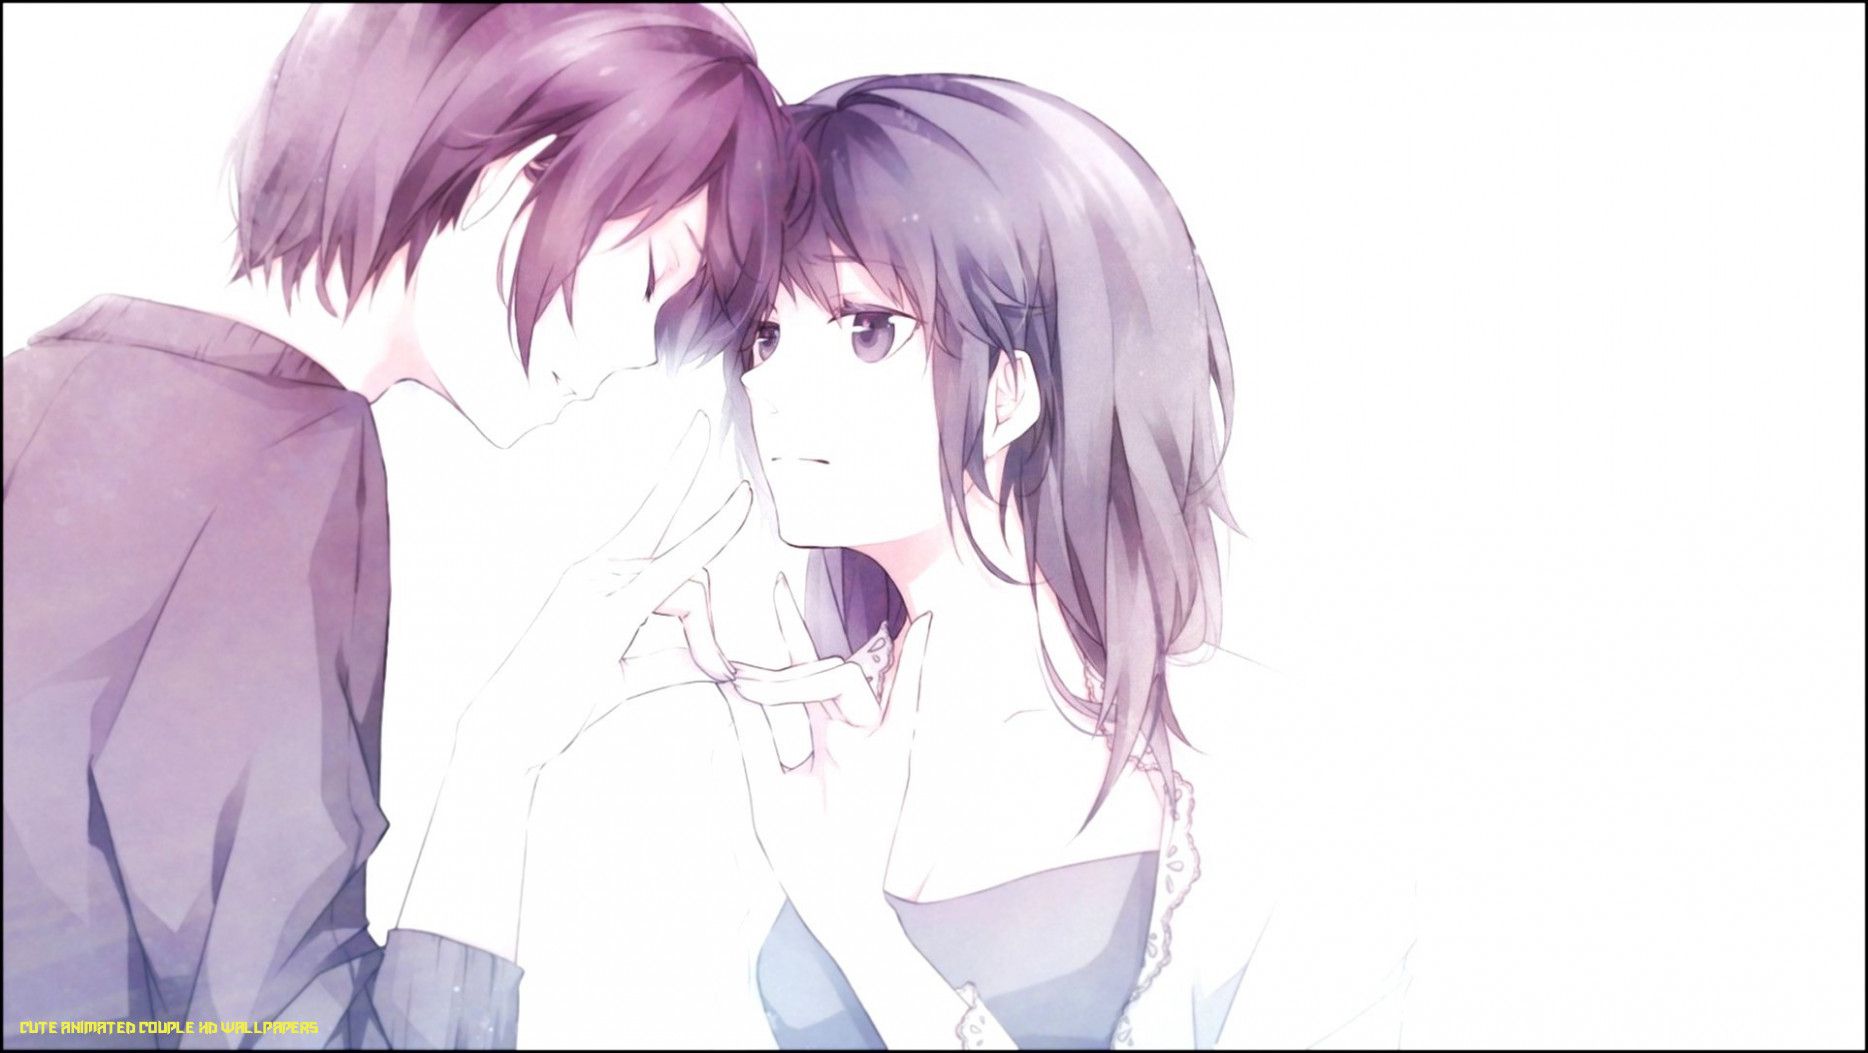 Cute Anime Couple Wallpaper